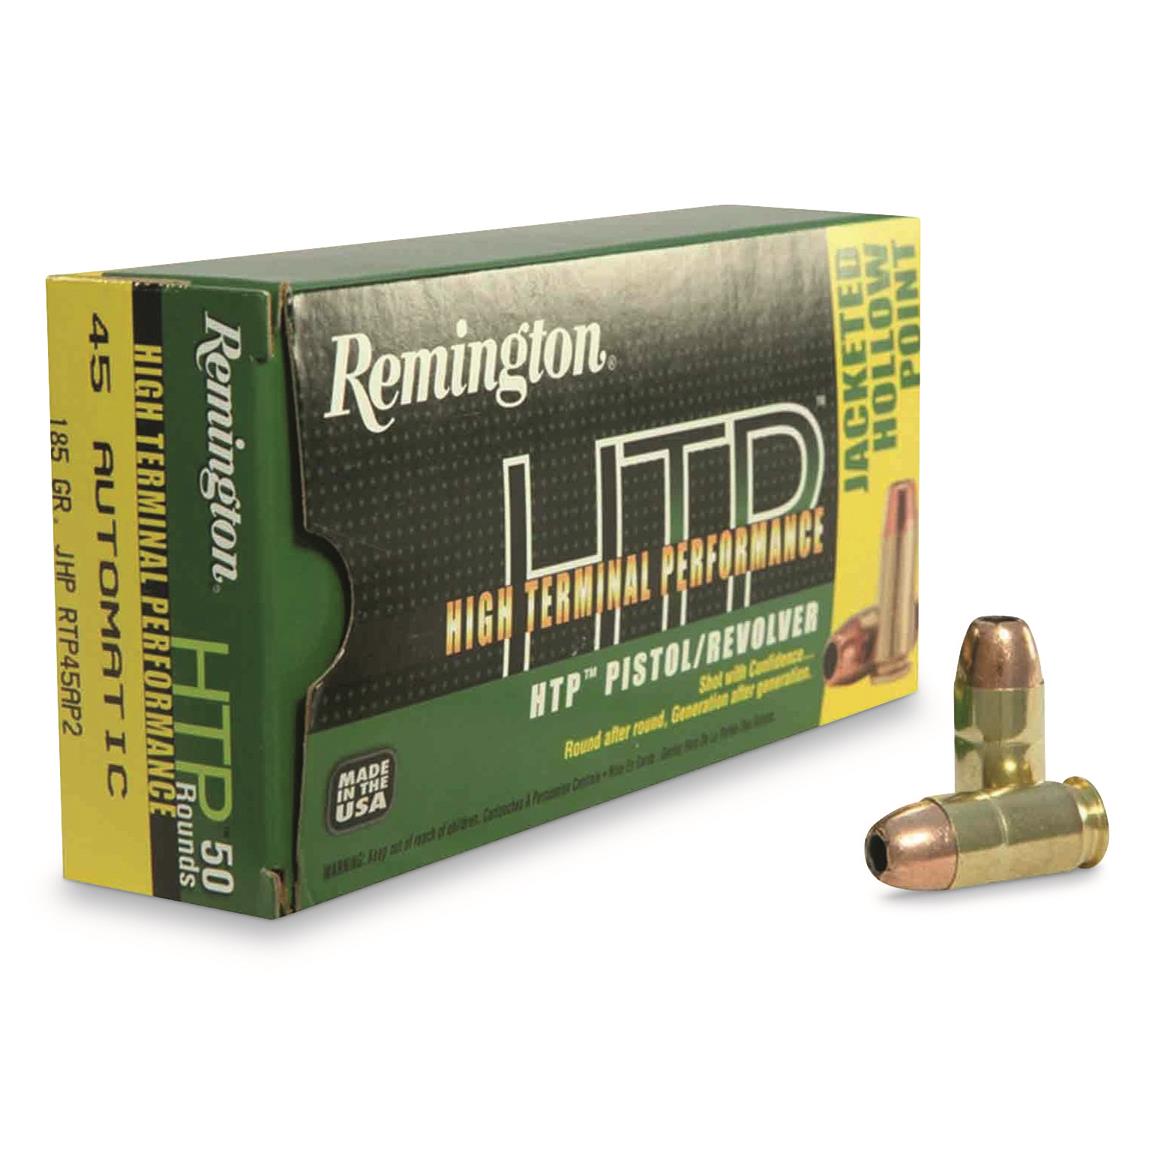 Remington High Terminal Performance, .45 ACP, JHP, 185 Grain, 50 Rounds - 283168, .45 ACP Ammo at Sportsman's Guide